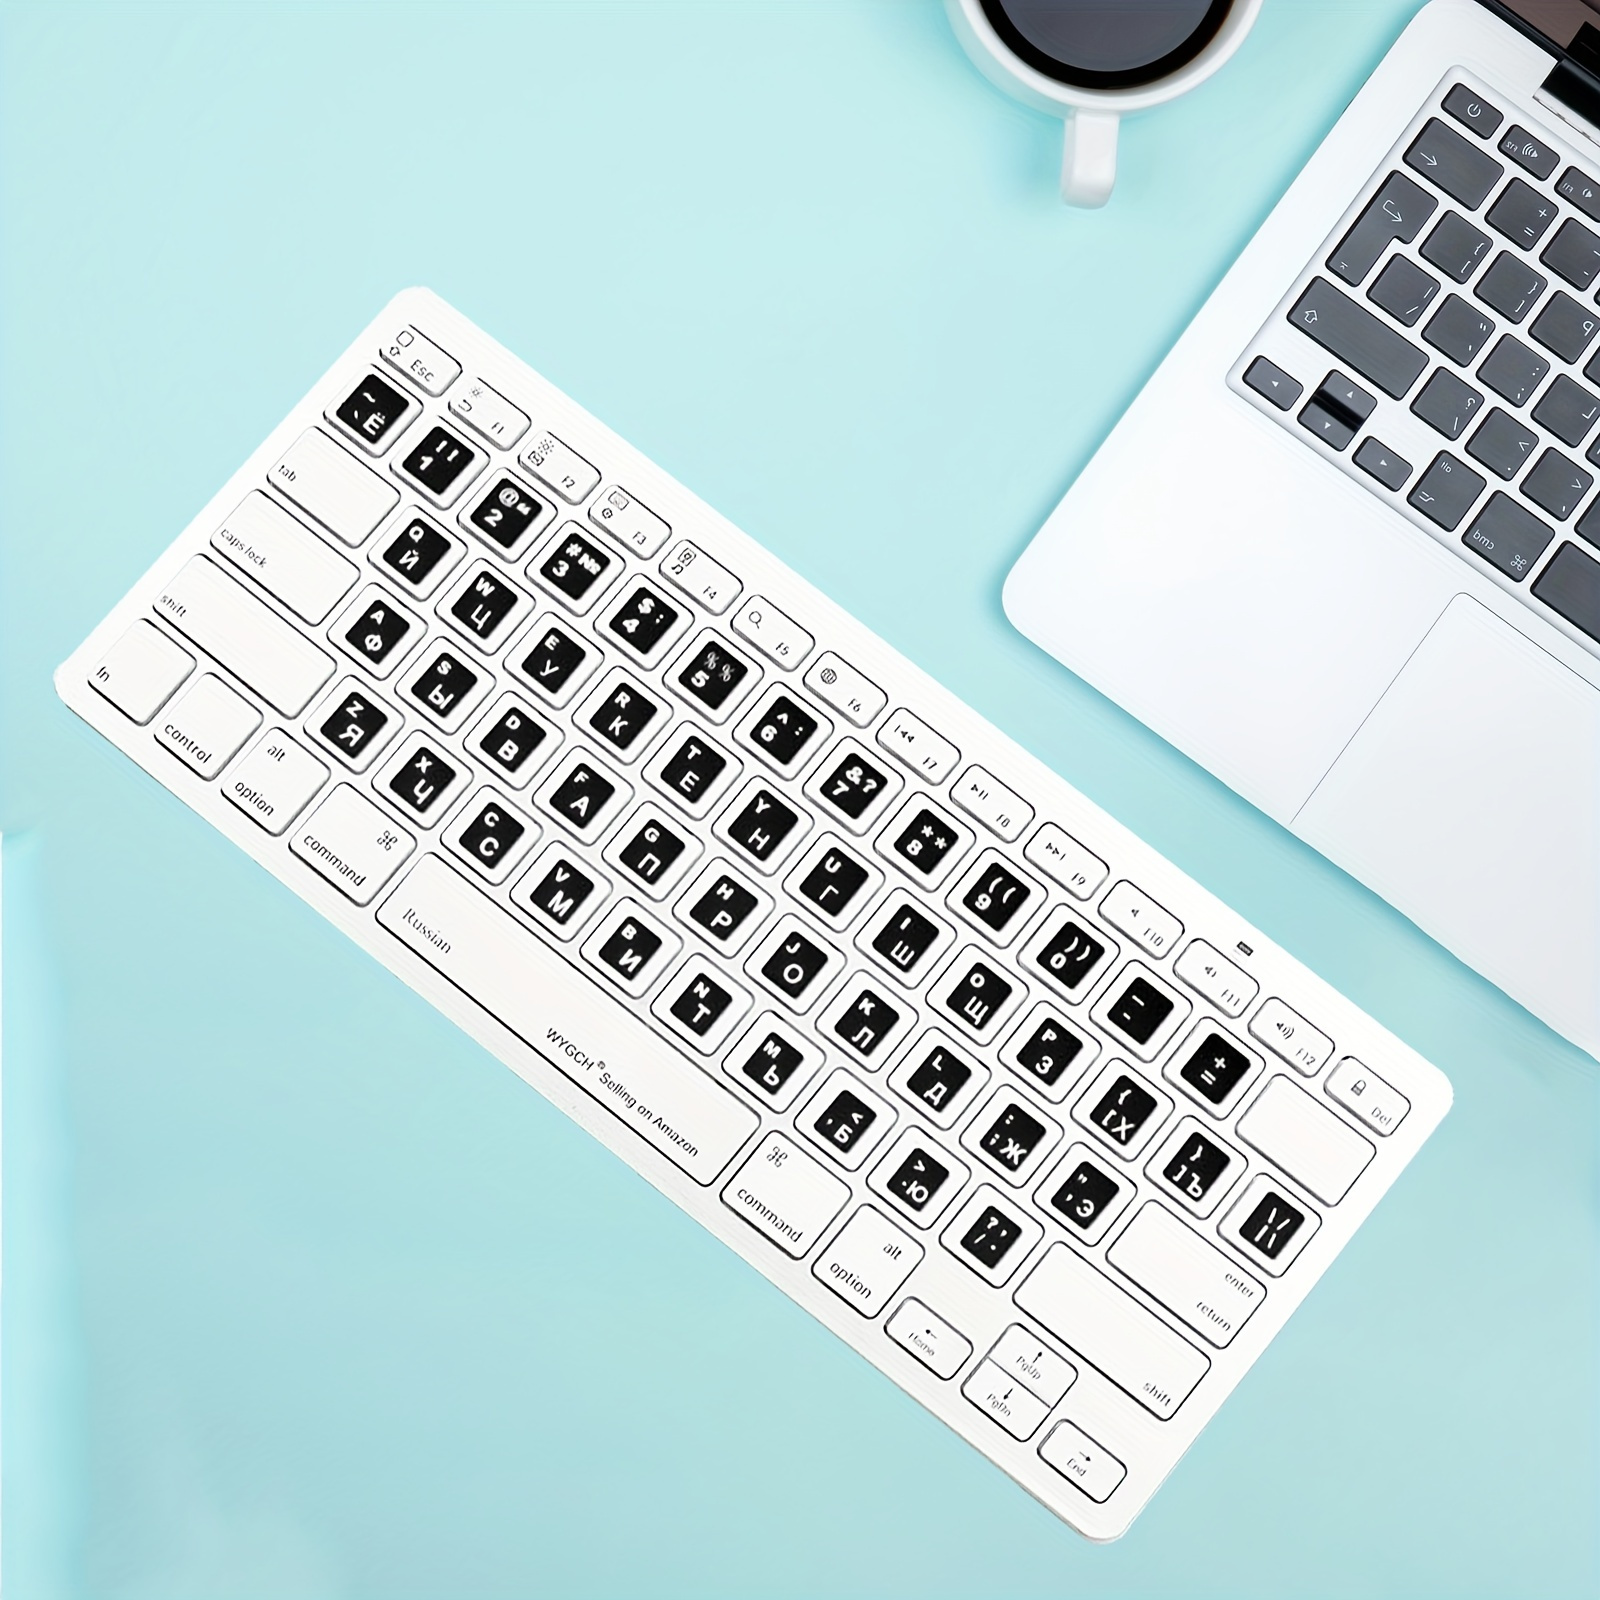 

Russian Korean Arabic English Keyboard Sticker, 3 Pack Of Universal Keyboard Stickers For Imac Laptop Keyboard, Good Sticky